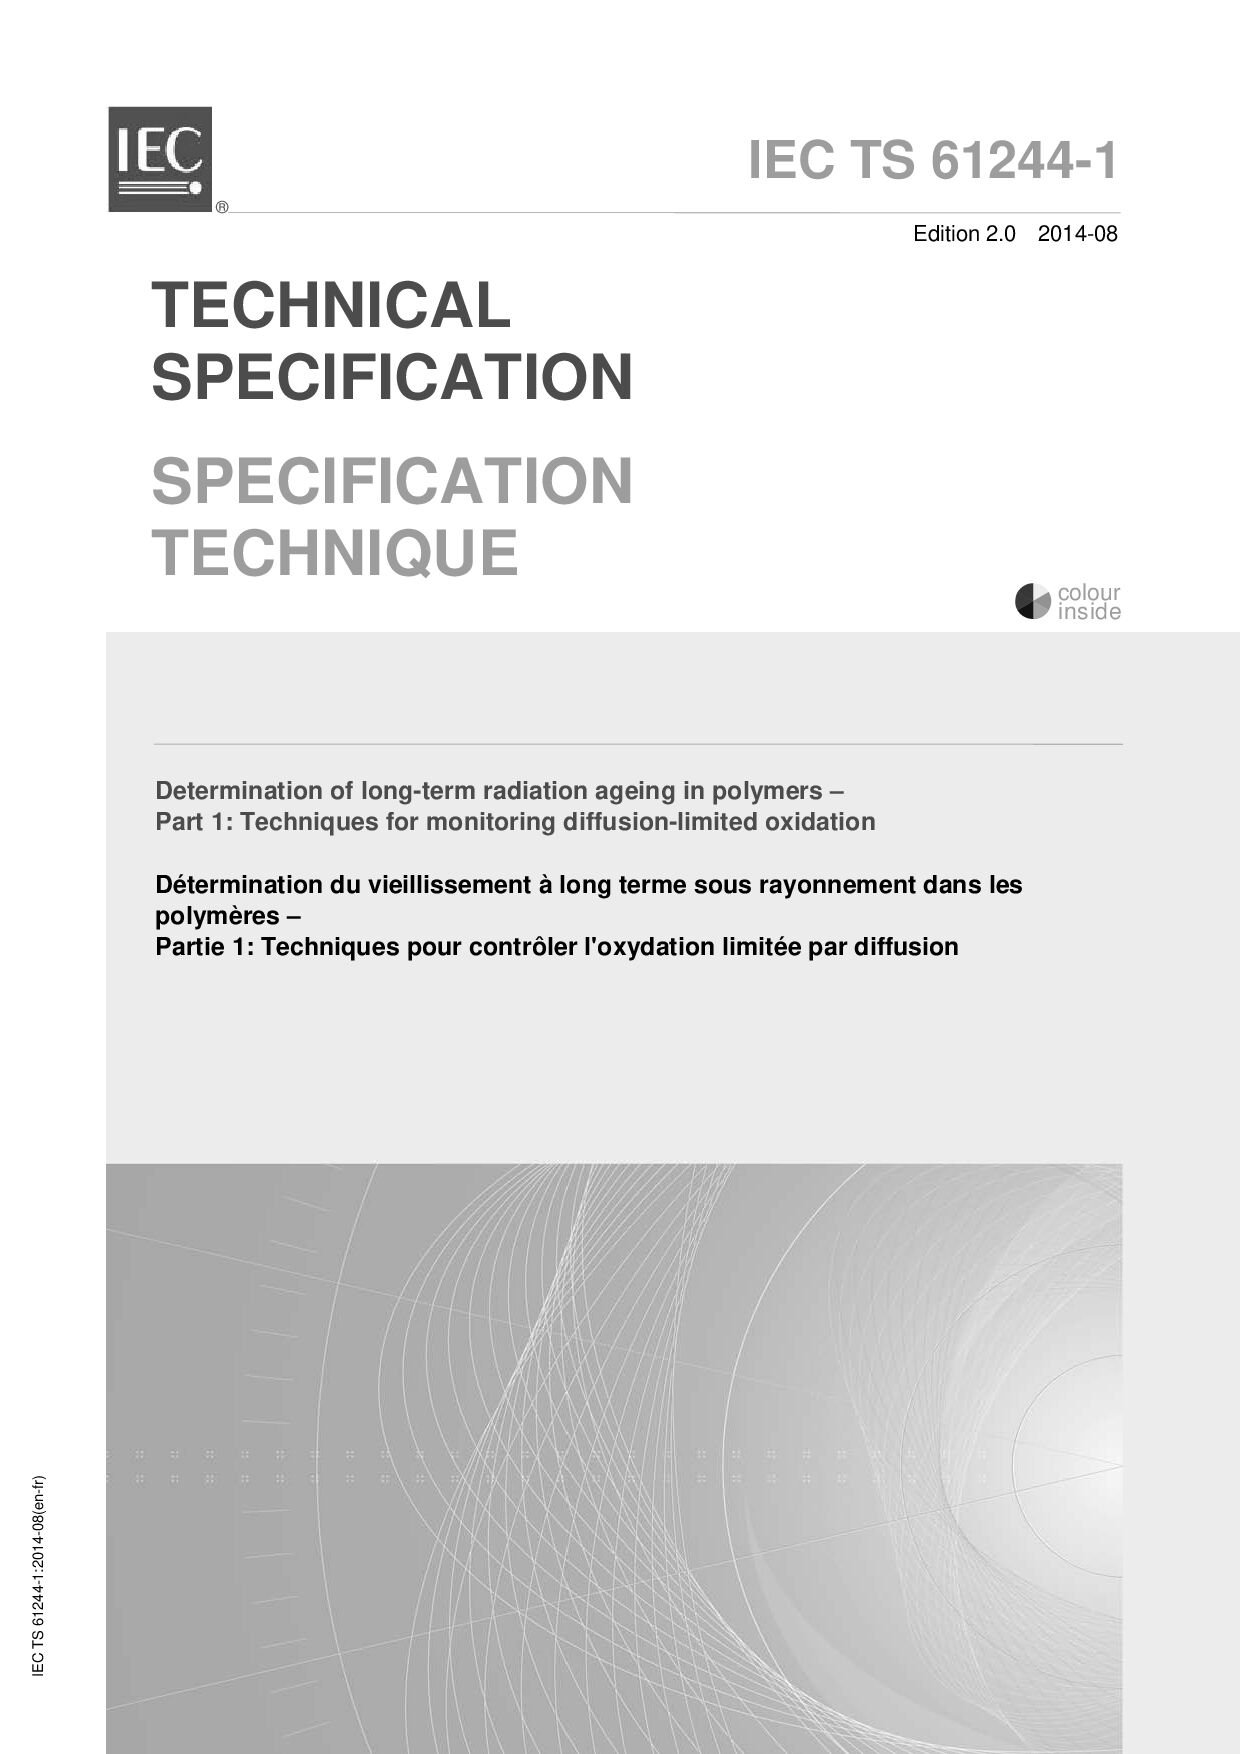 IEC TS 61244-1:2014封面图